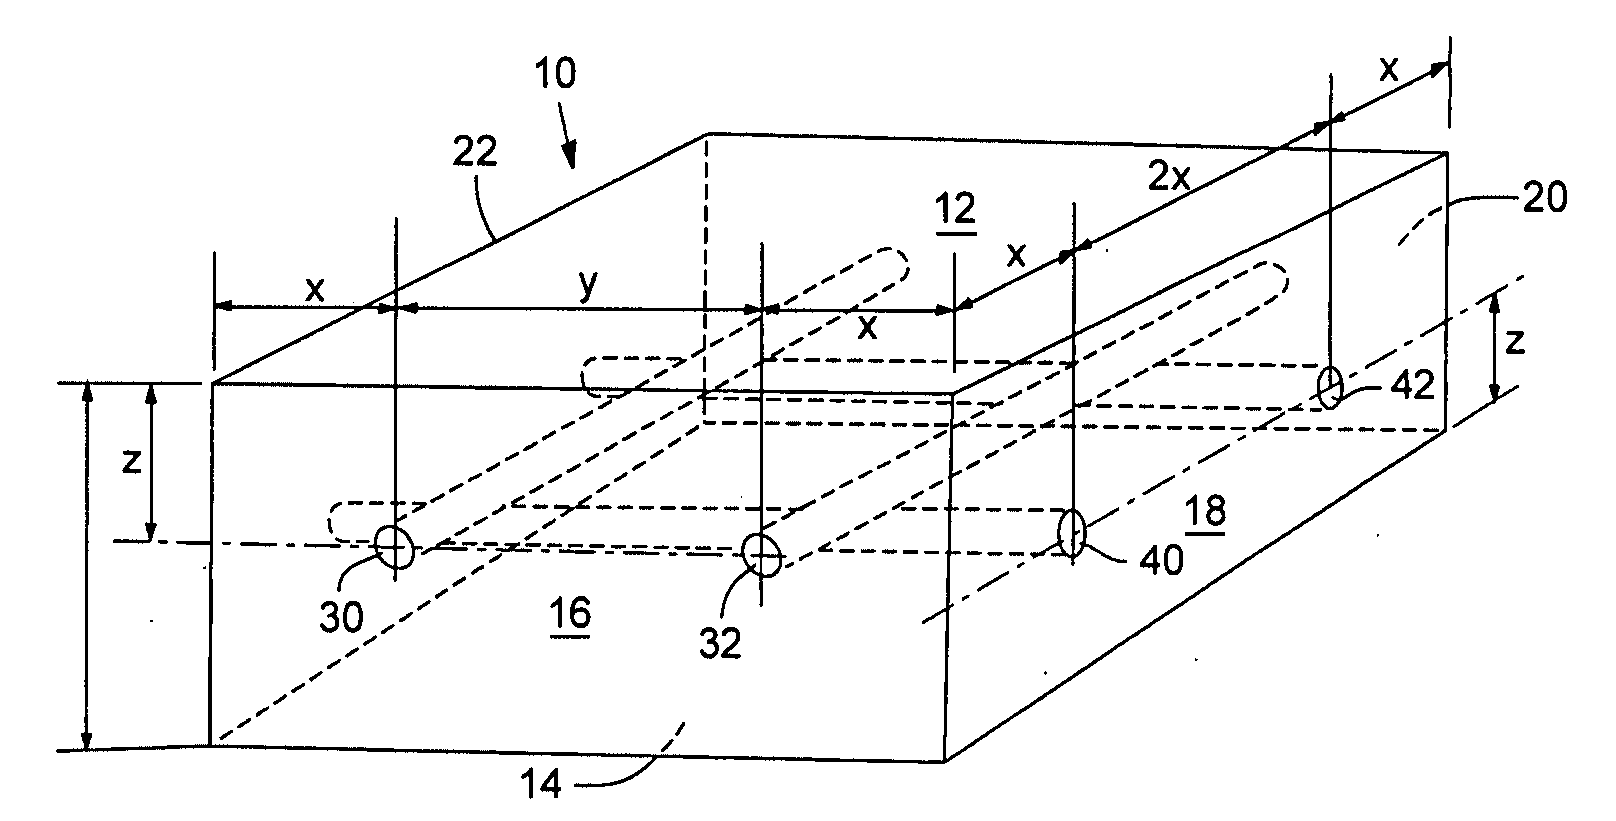 Apparatus and method for interlocking blocks